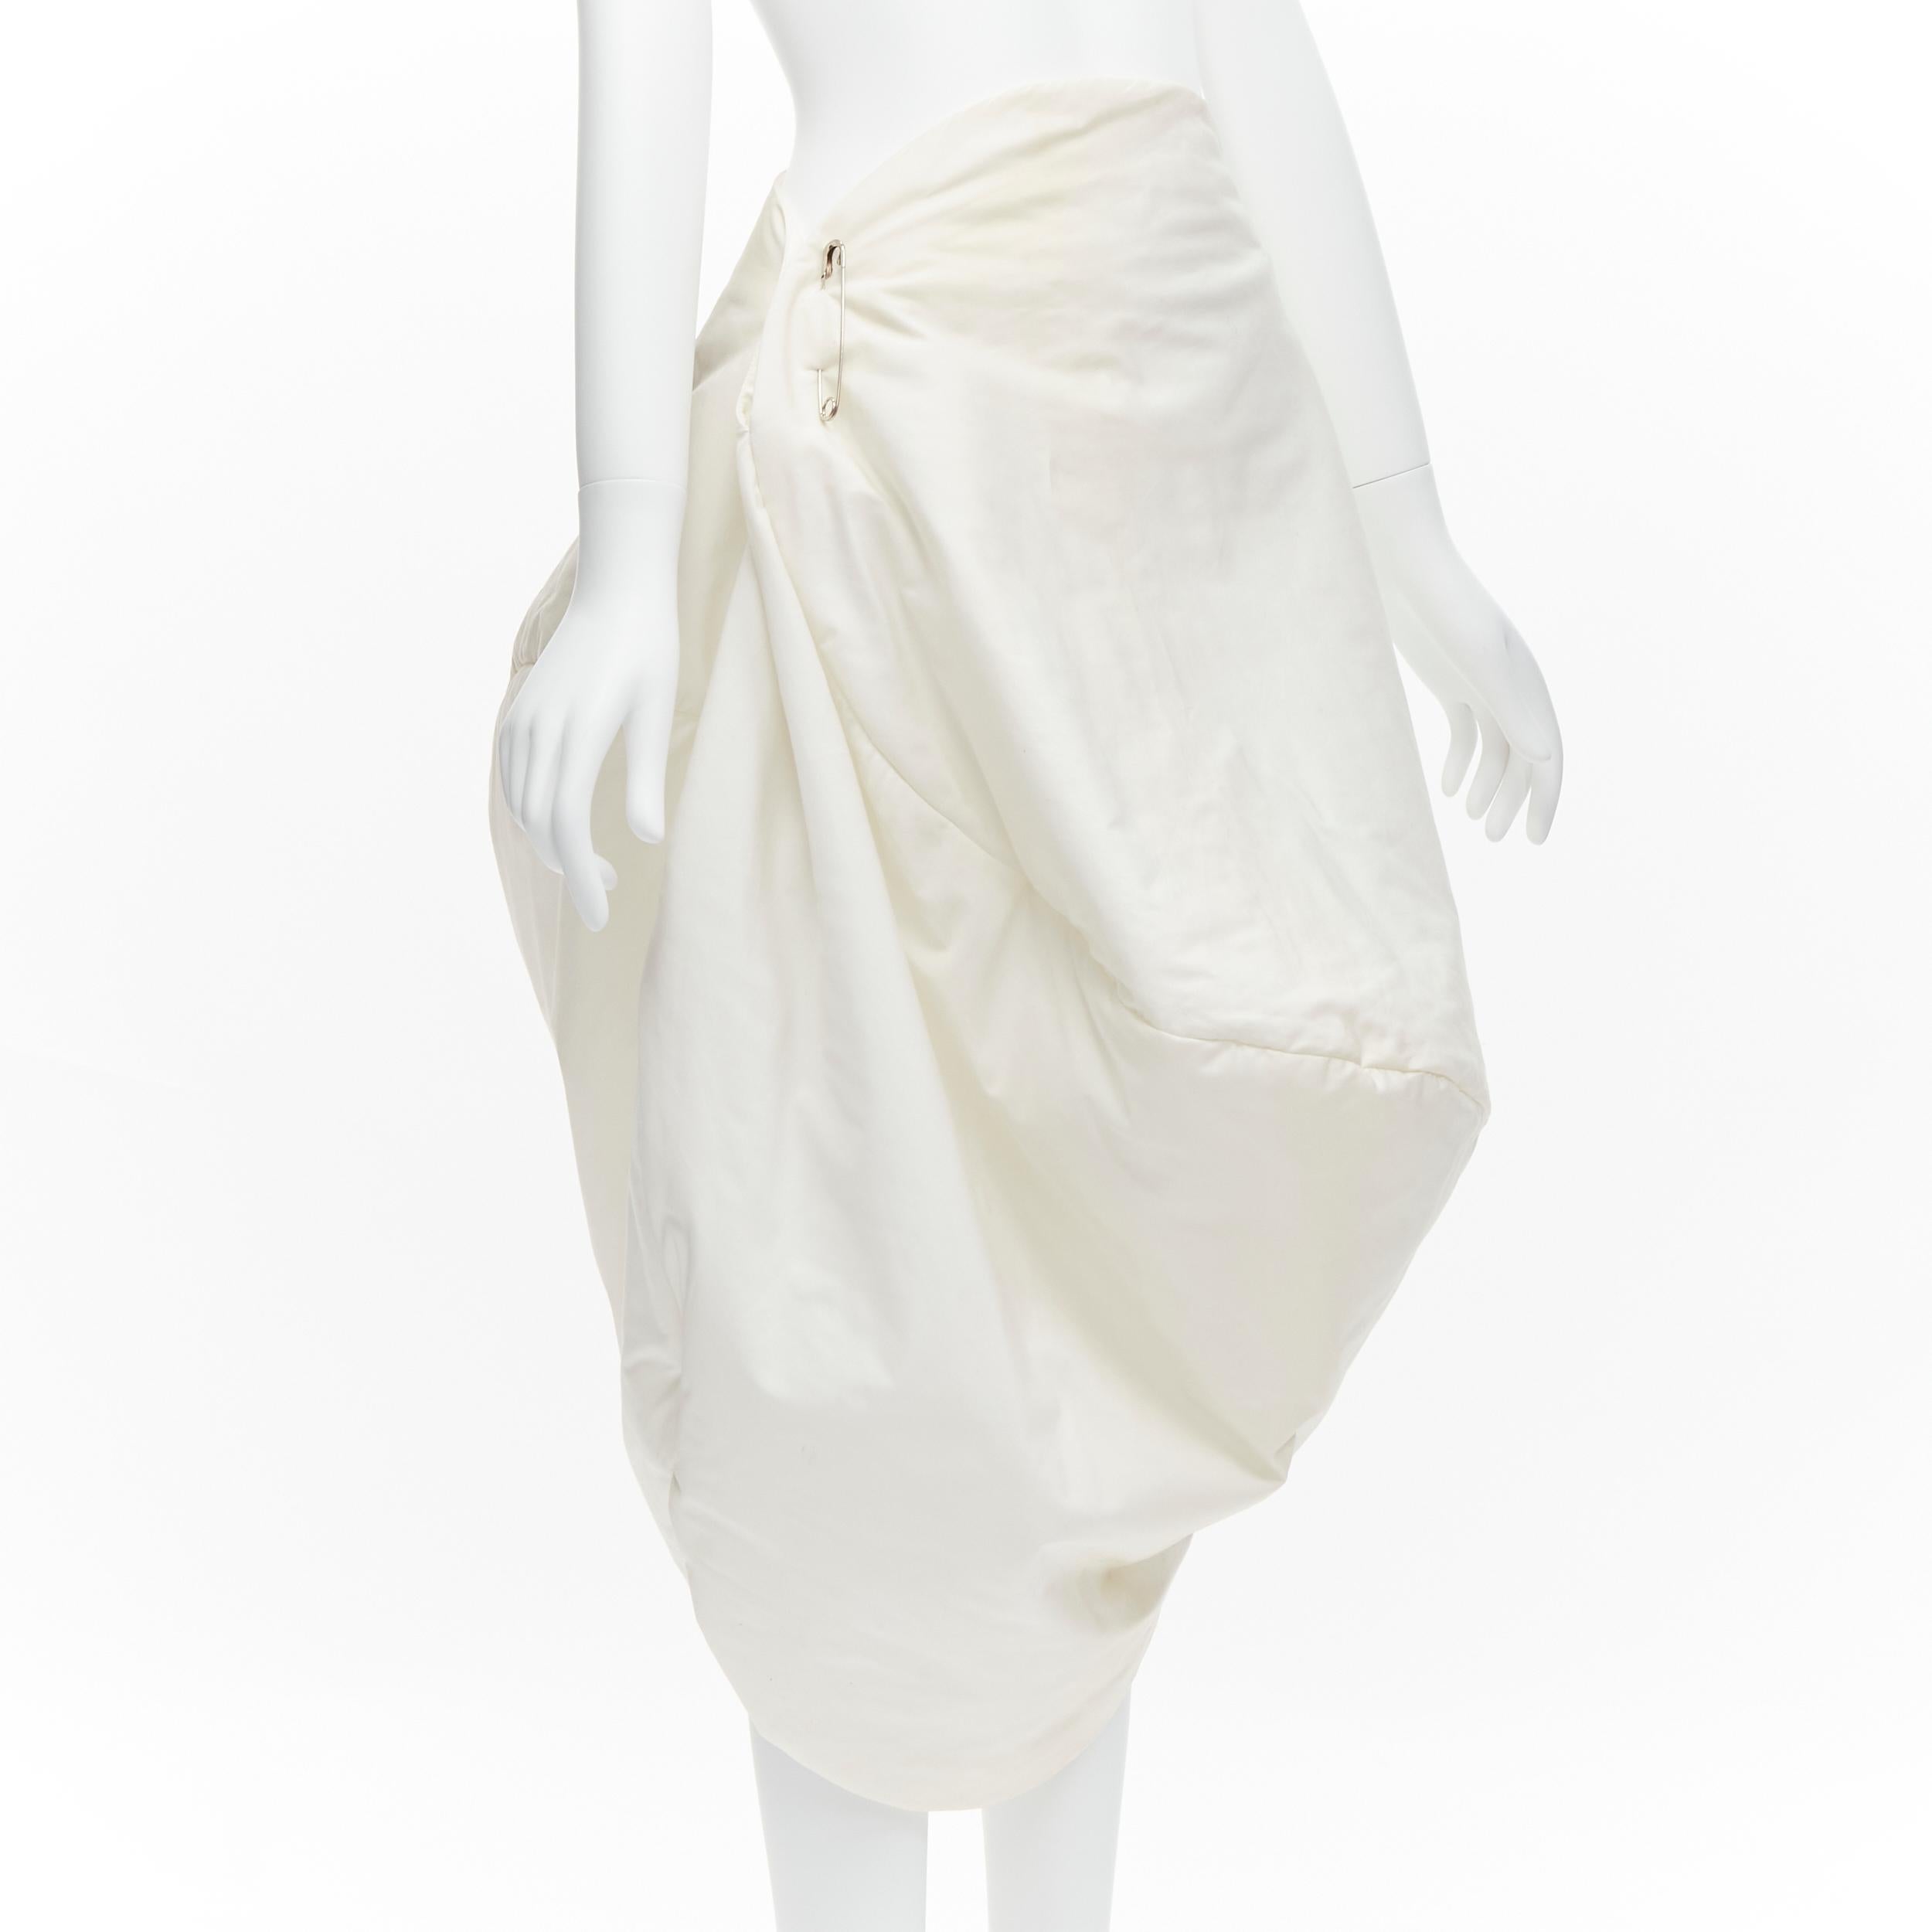 rare COMME DES GARCONS 1997 Runway Lumps Bumps 3D white cotton bubble skirt M
Reference: CRTI/A00761
Brand: Comme Des Garcons
Designer: Rei Kawakubo
Collection: 1997 Lumps and Bumps - Runway
Material: Cotton
Color: White
Pattern: Solid
Closure: